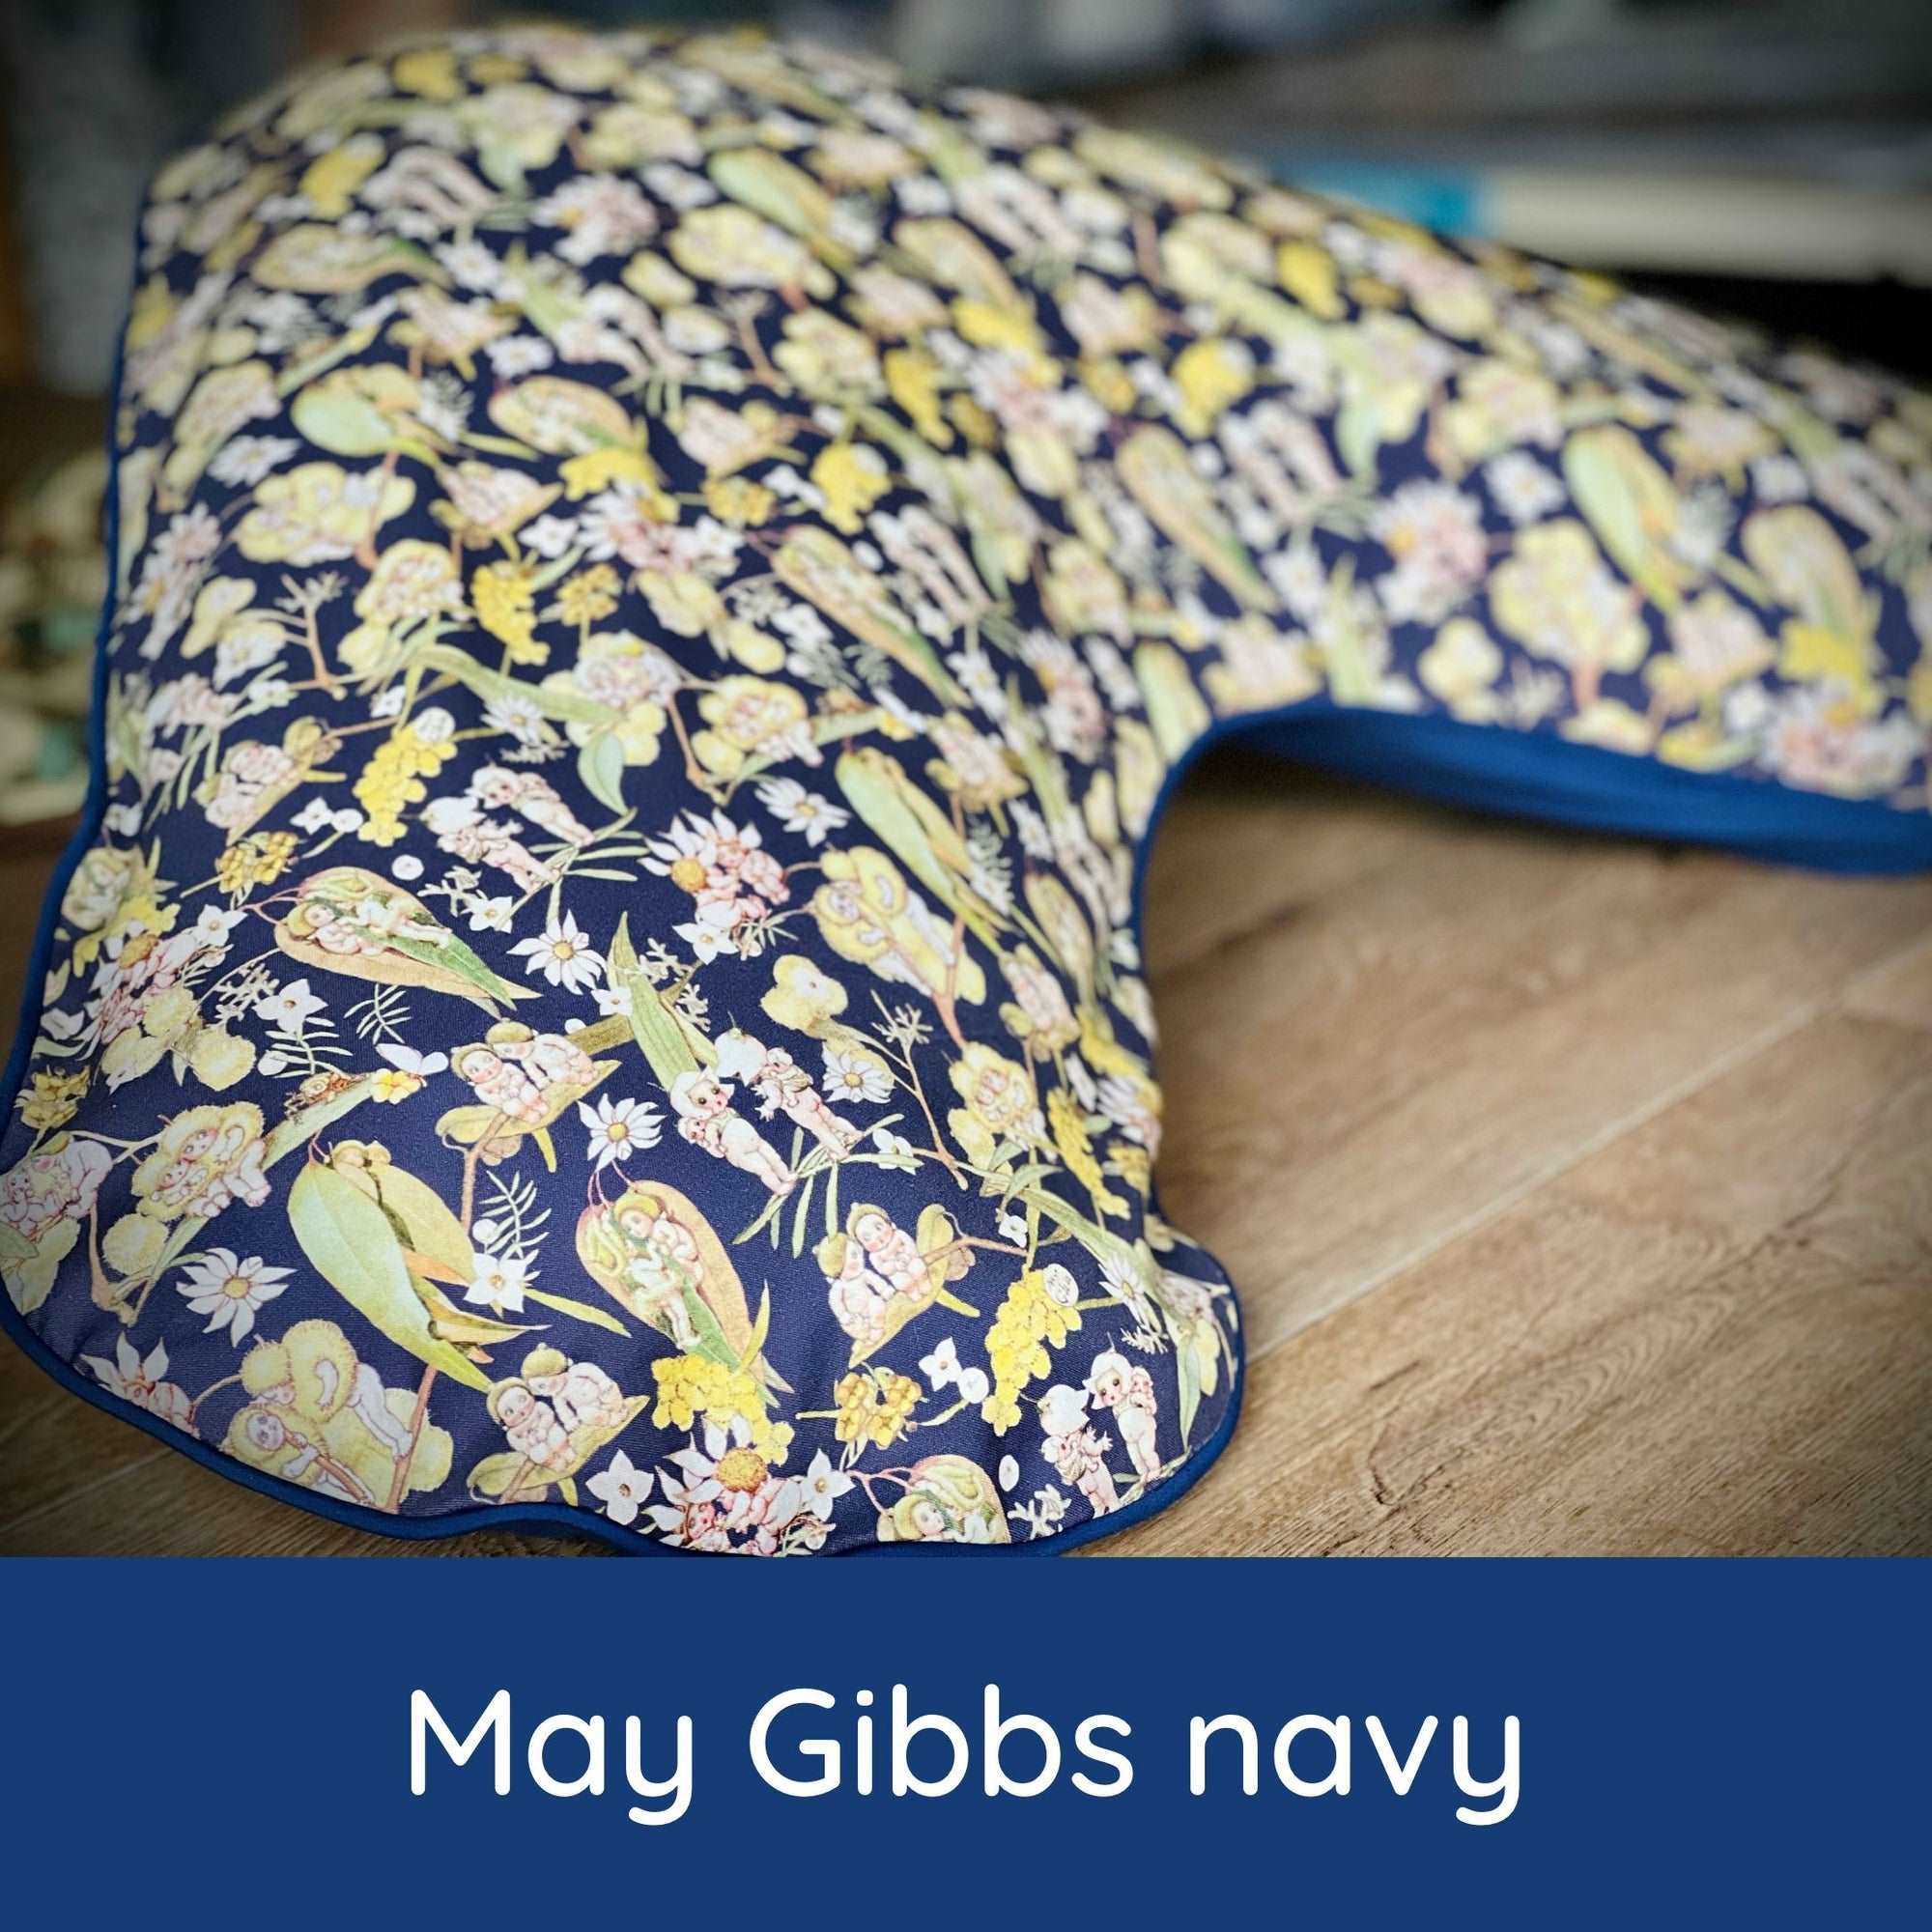 May Gibbs Navy - Boomerang Pillow Case